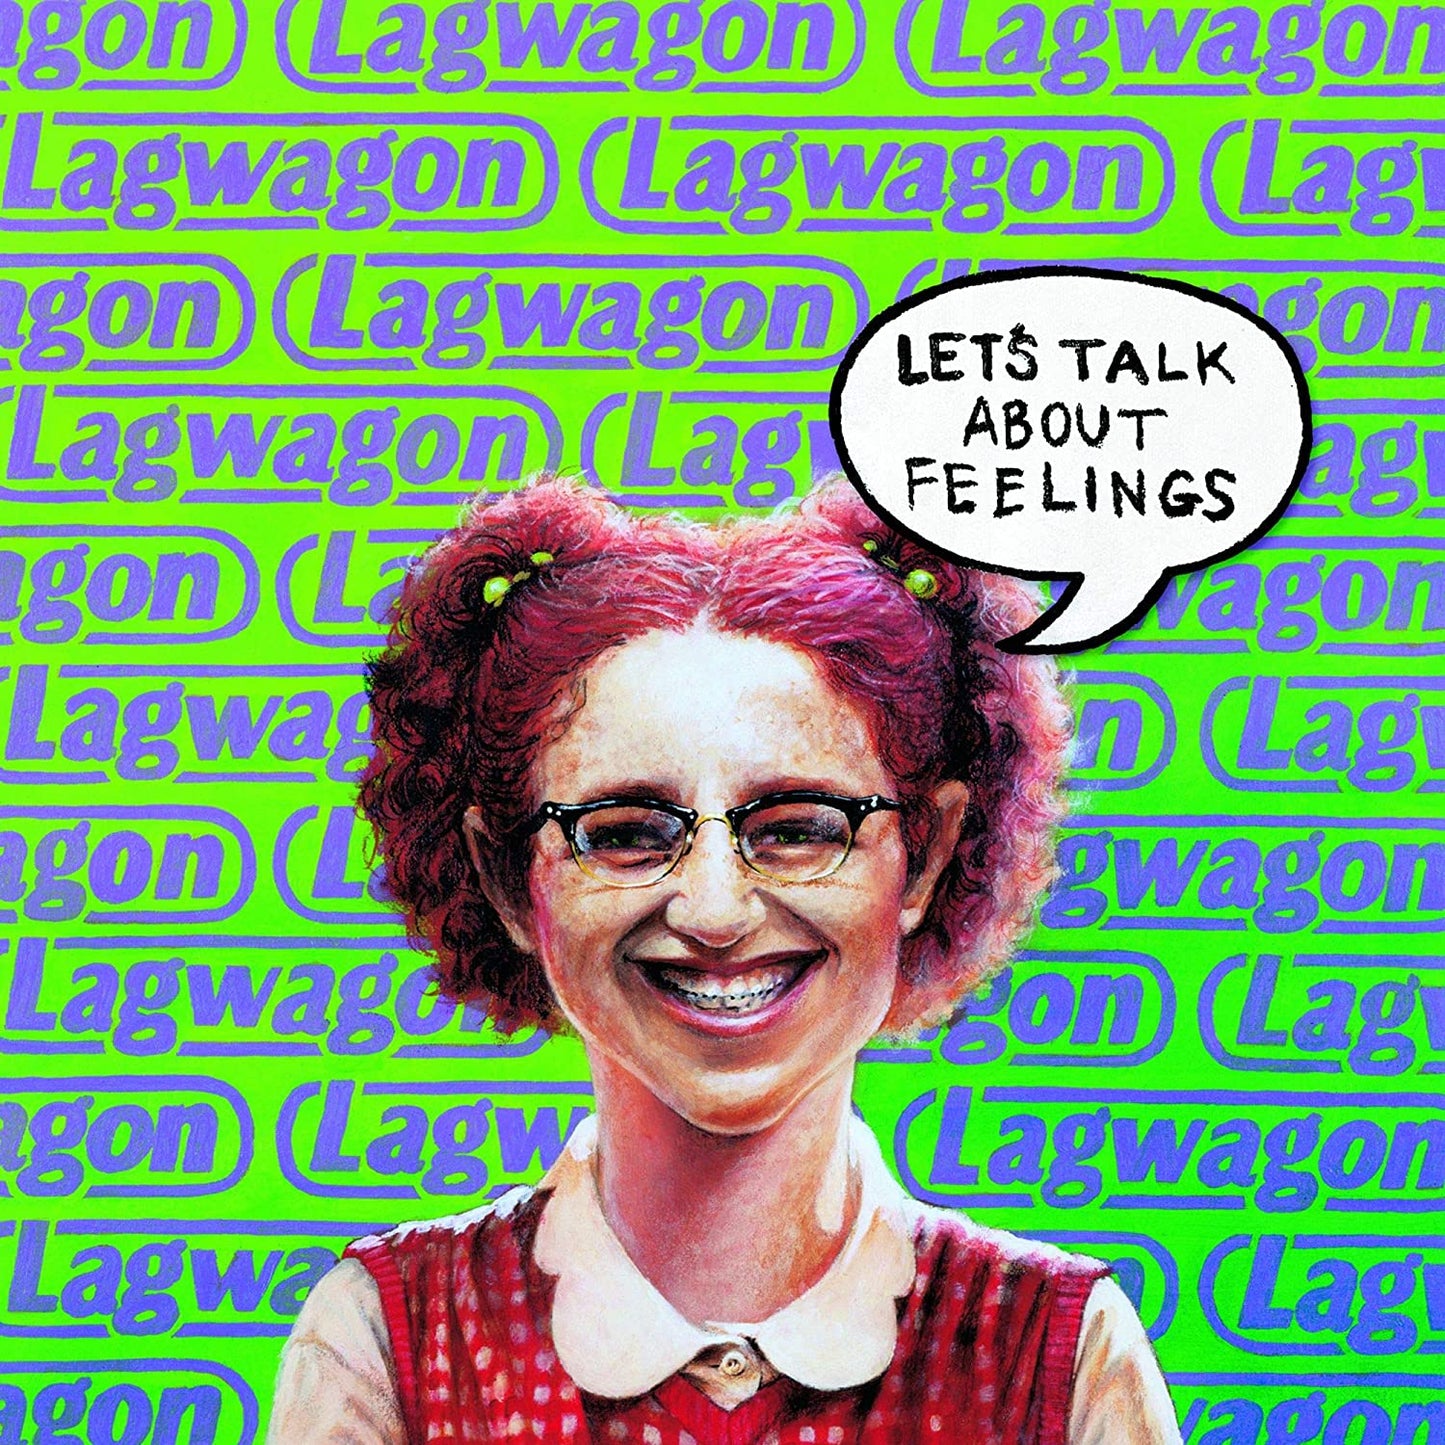 Lagwagon - Let's Talk About Feelings - 2LP